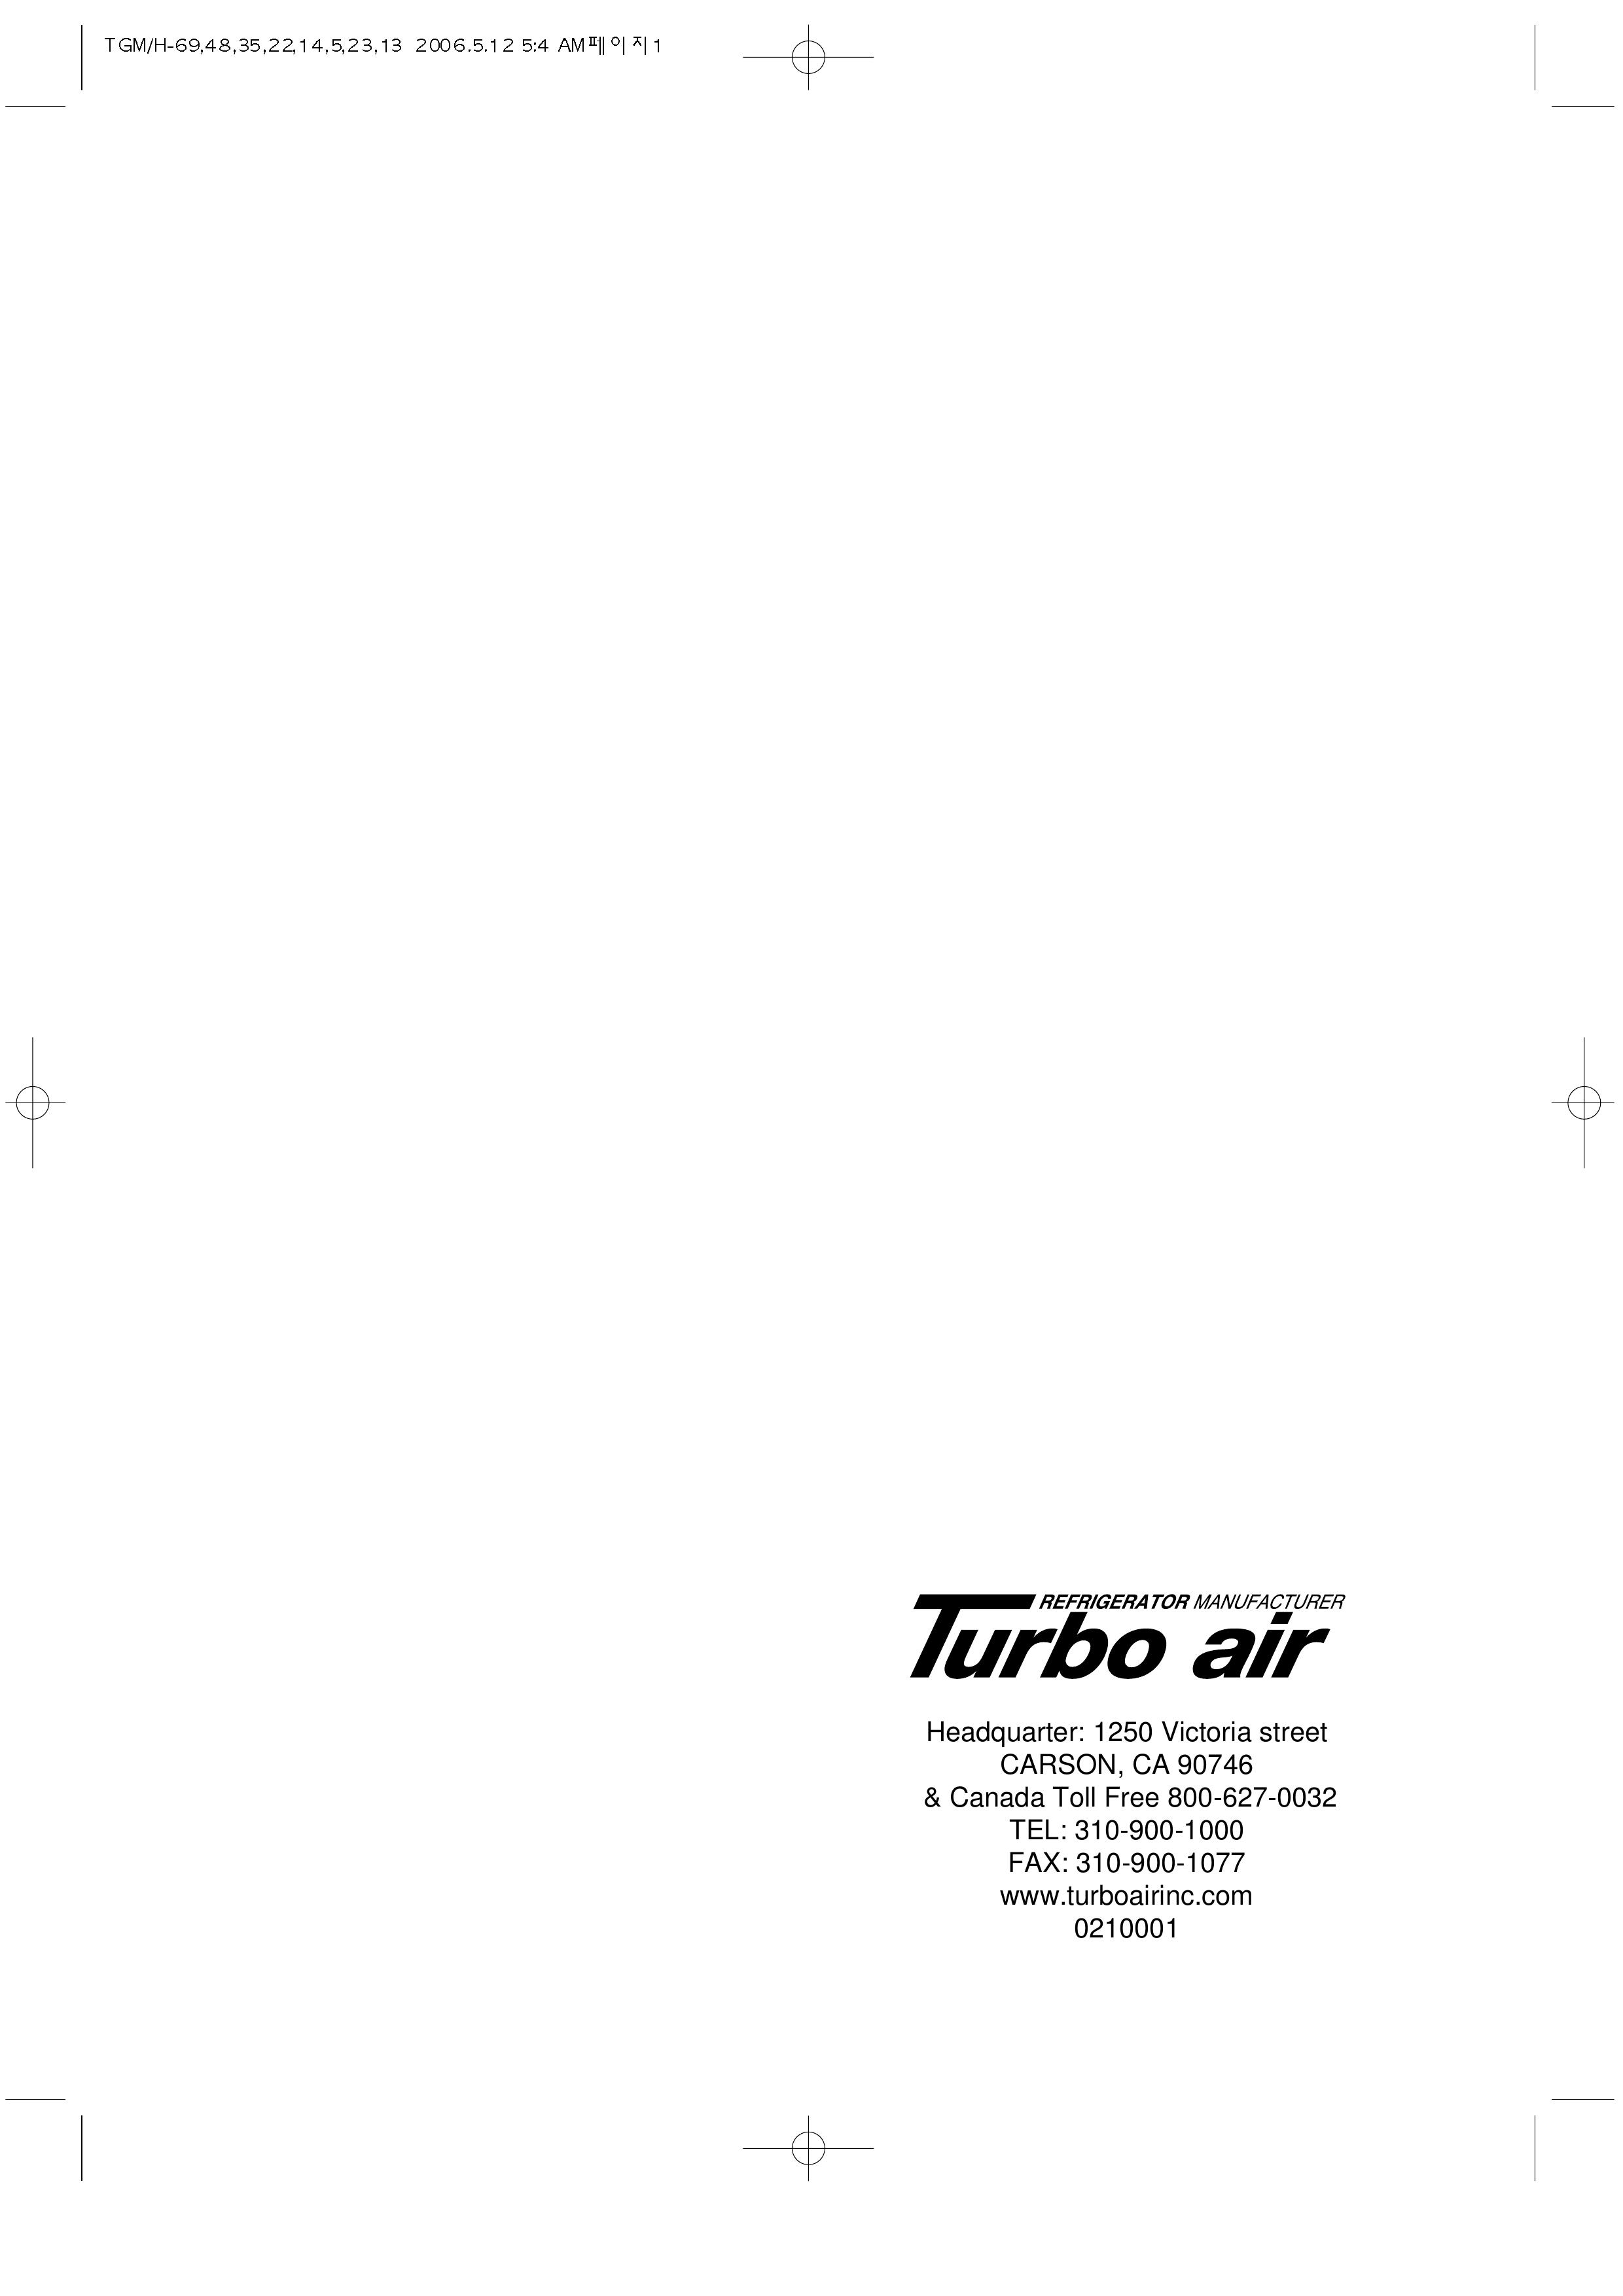 Turbo Air TGM-45R Refrigerator User Manual